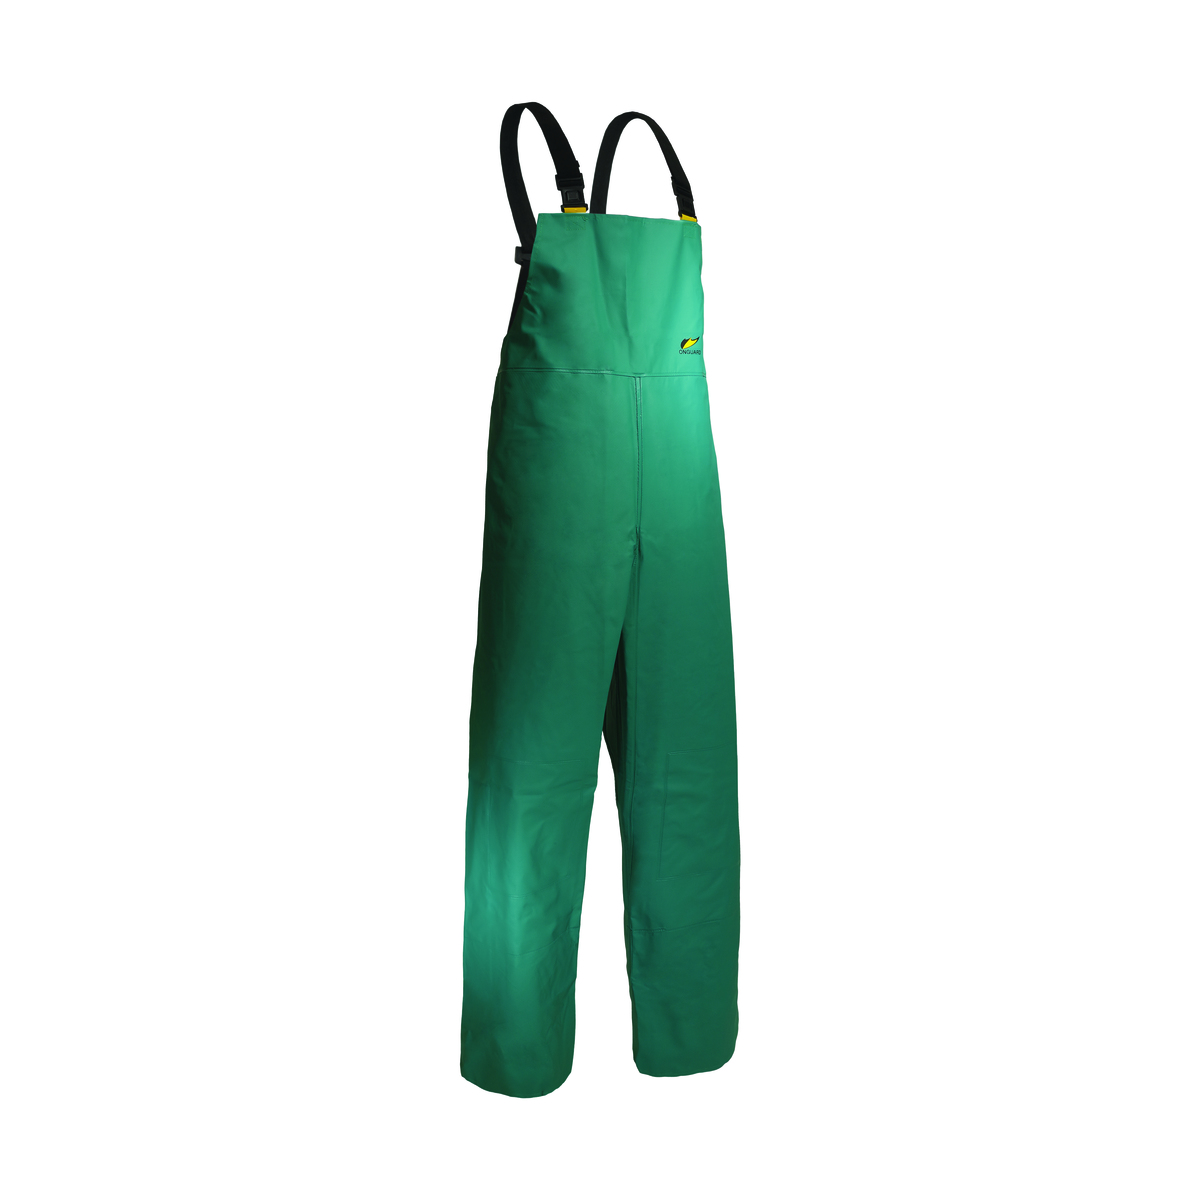 Dunlop® Protective Footwear X-Large Green Chemtex .42 mm Nylon/Polyester/PVC Bib Pants